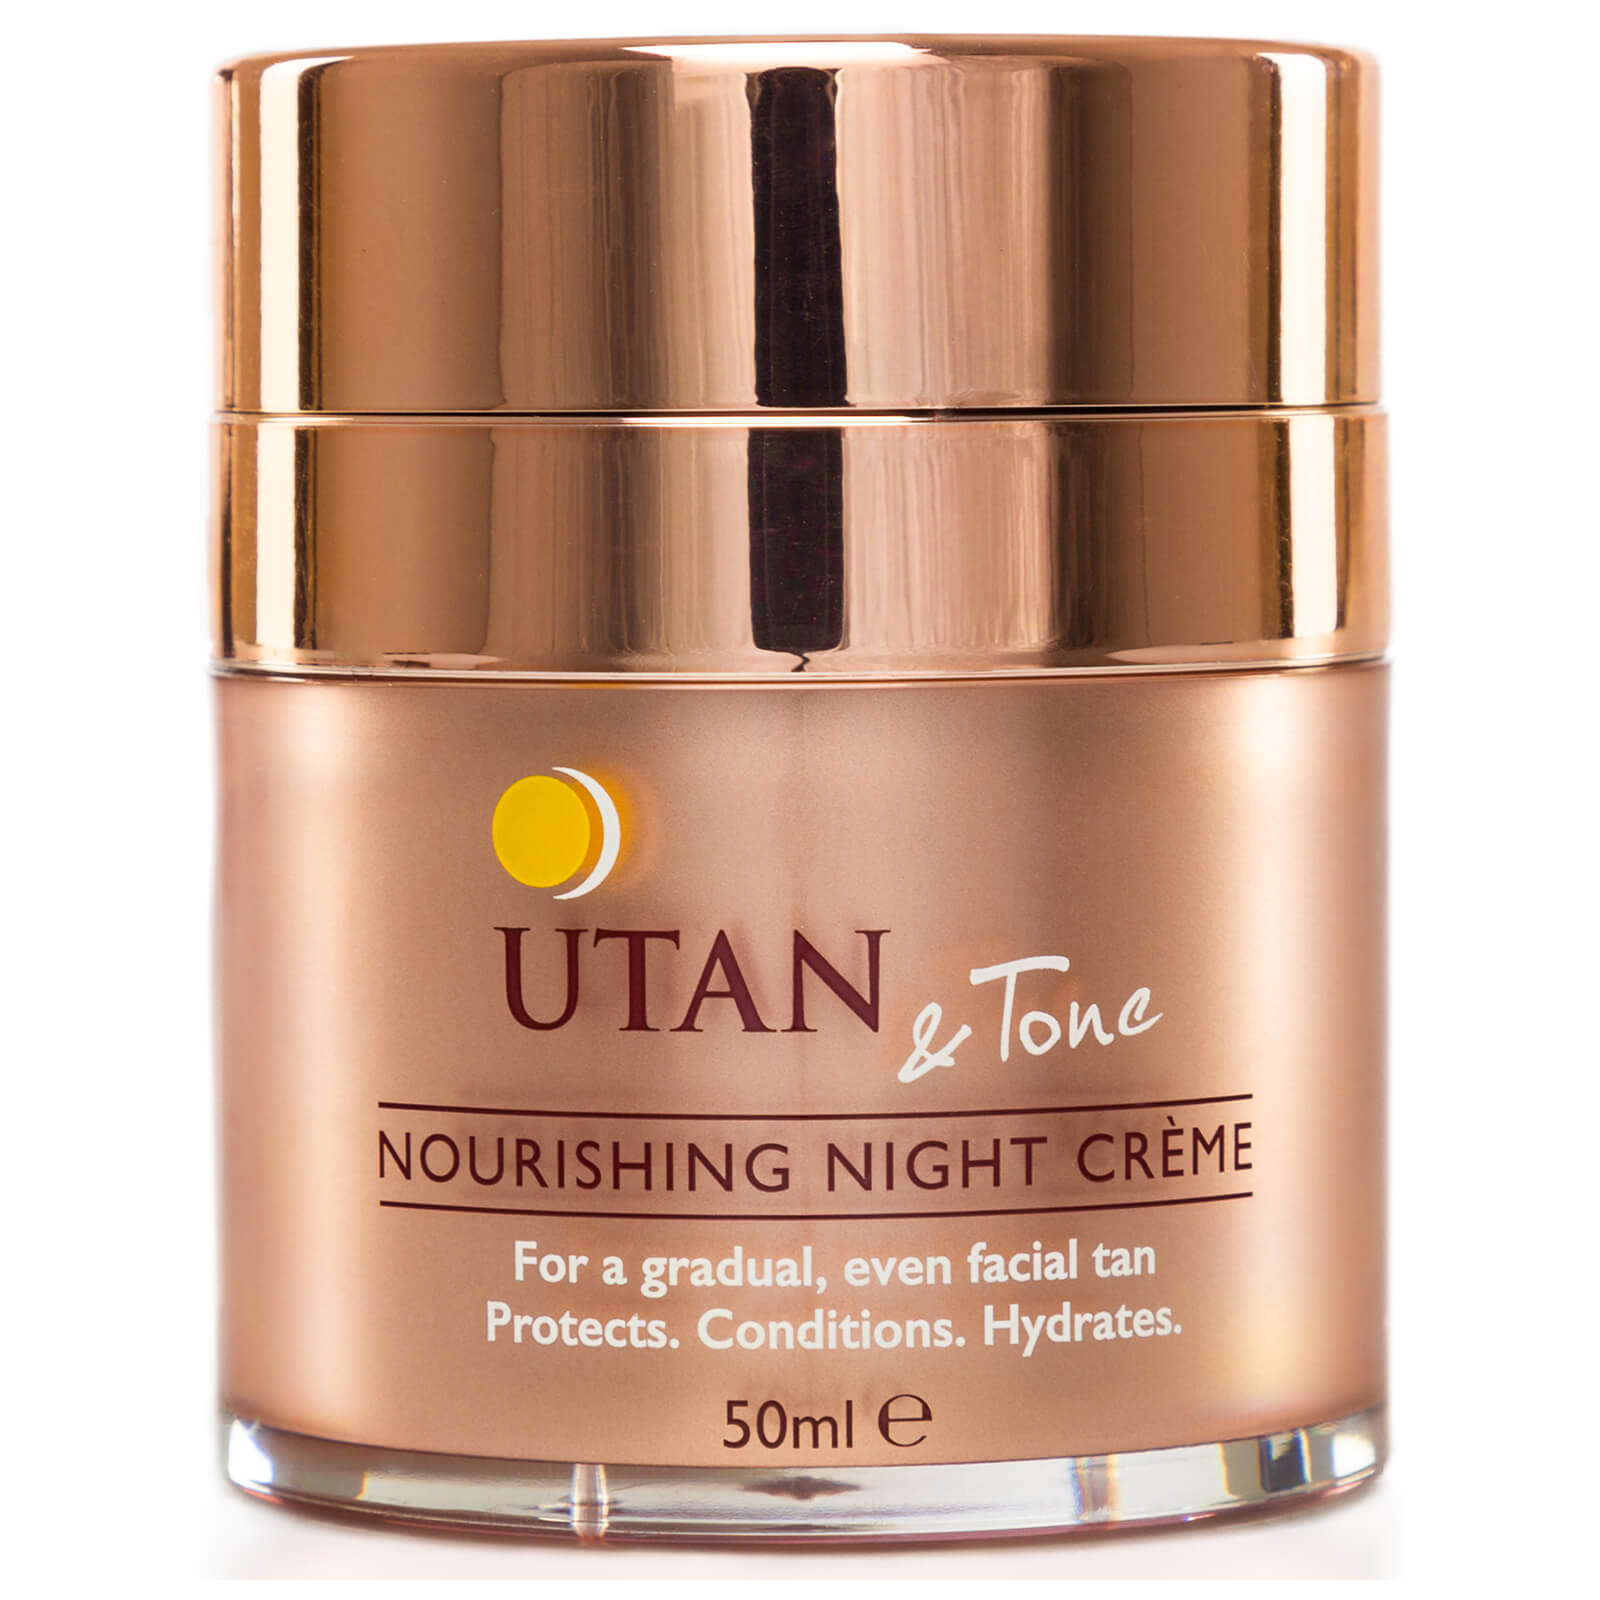 Crema de noche nutritiva de UTAN & Tone 50 ml